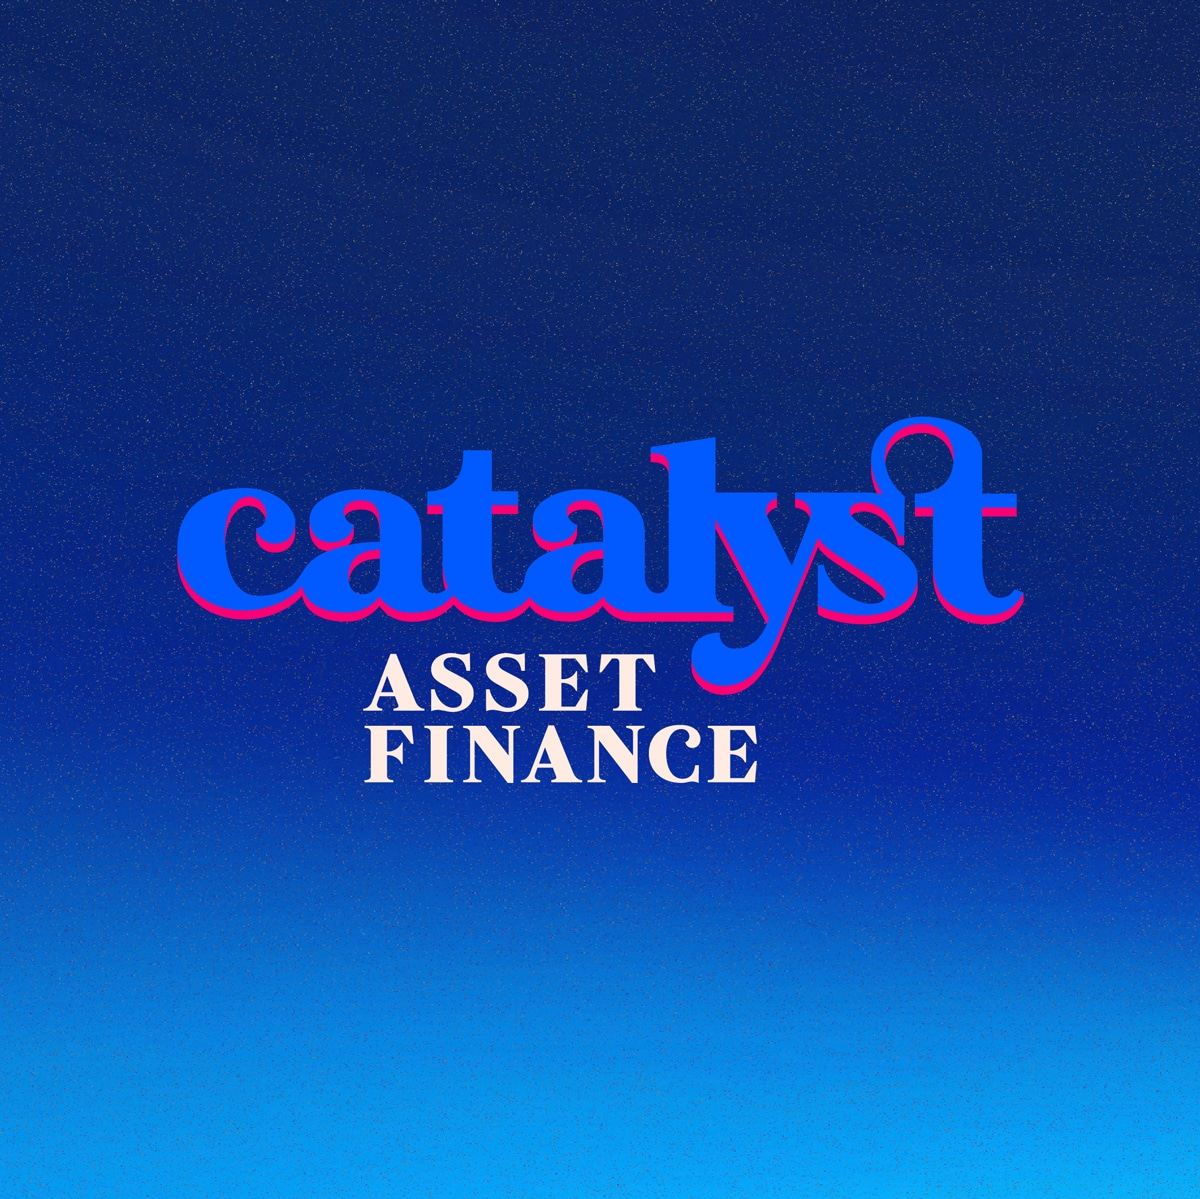 Catalyst Asset Finance<br />
Branding & on-going design suppoet